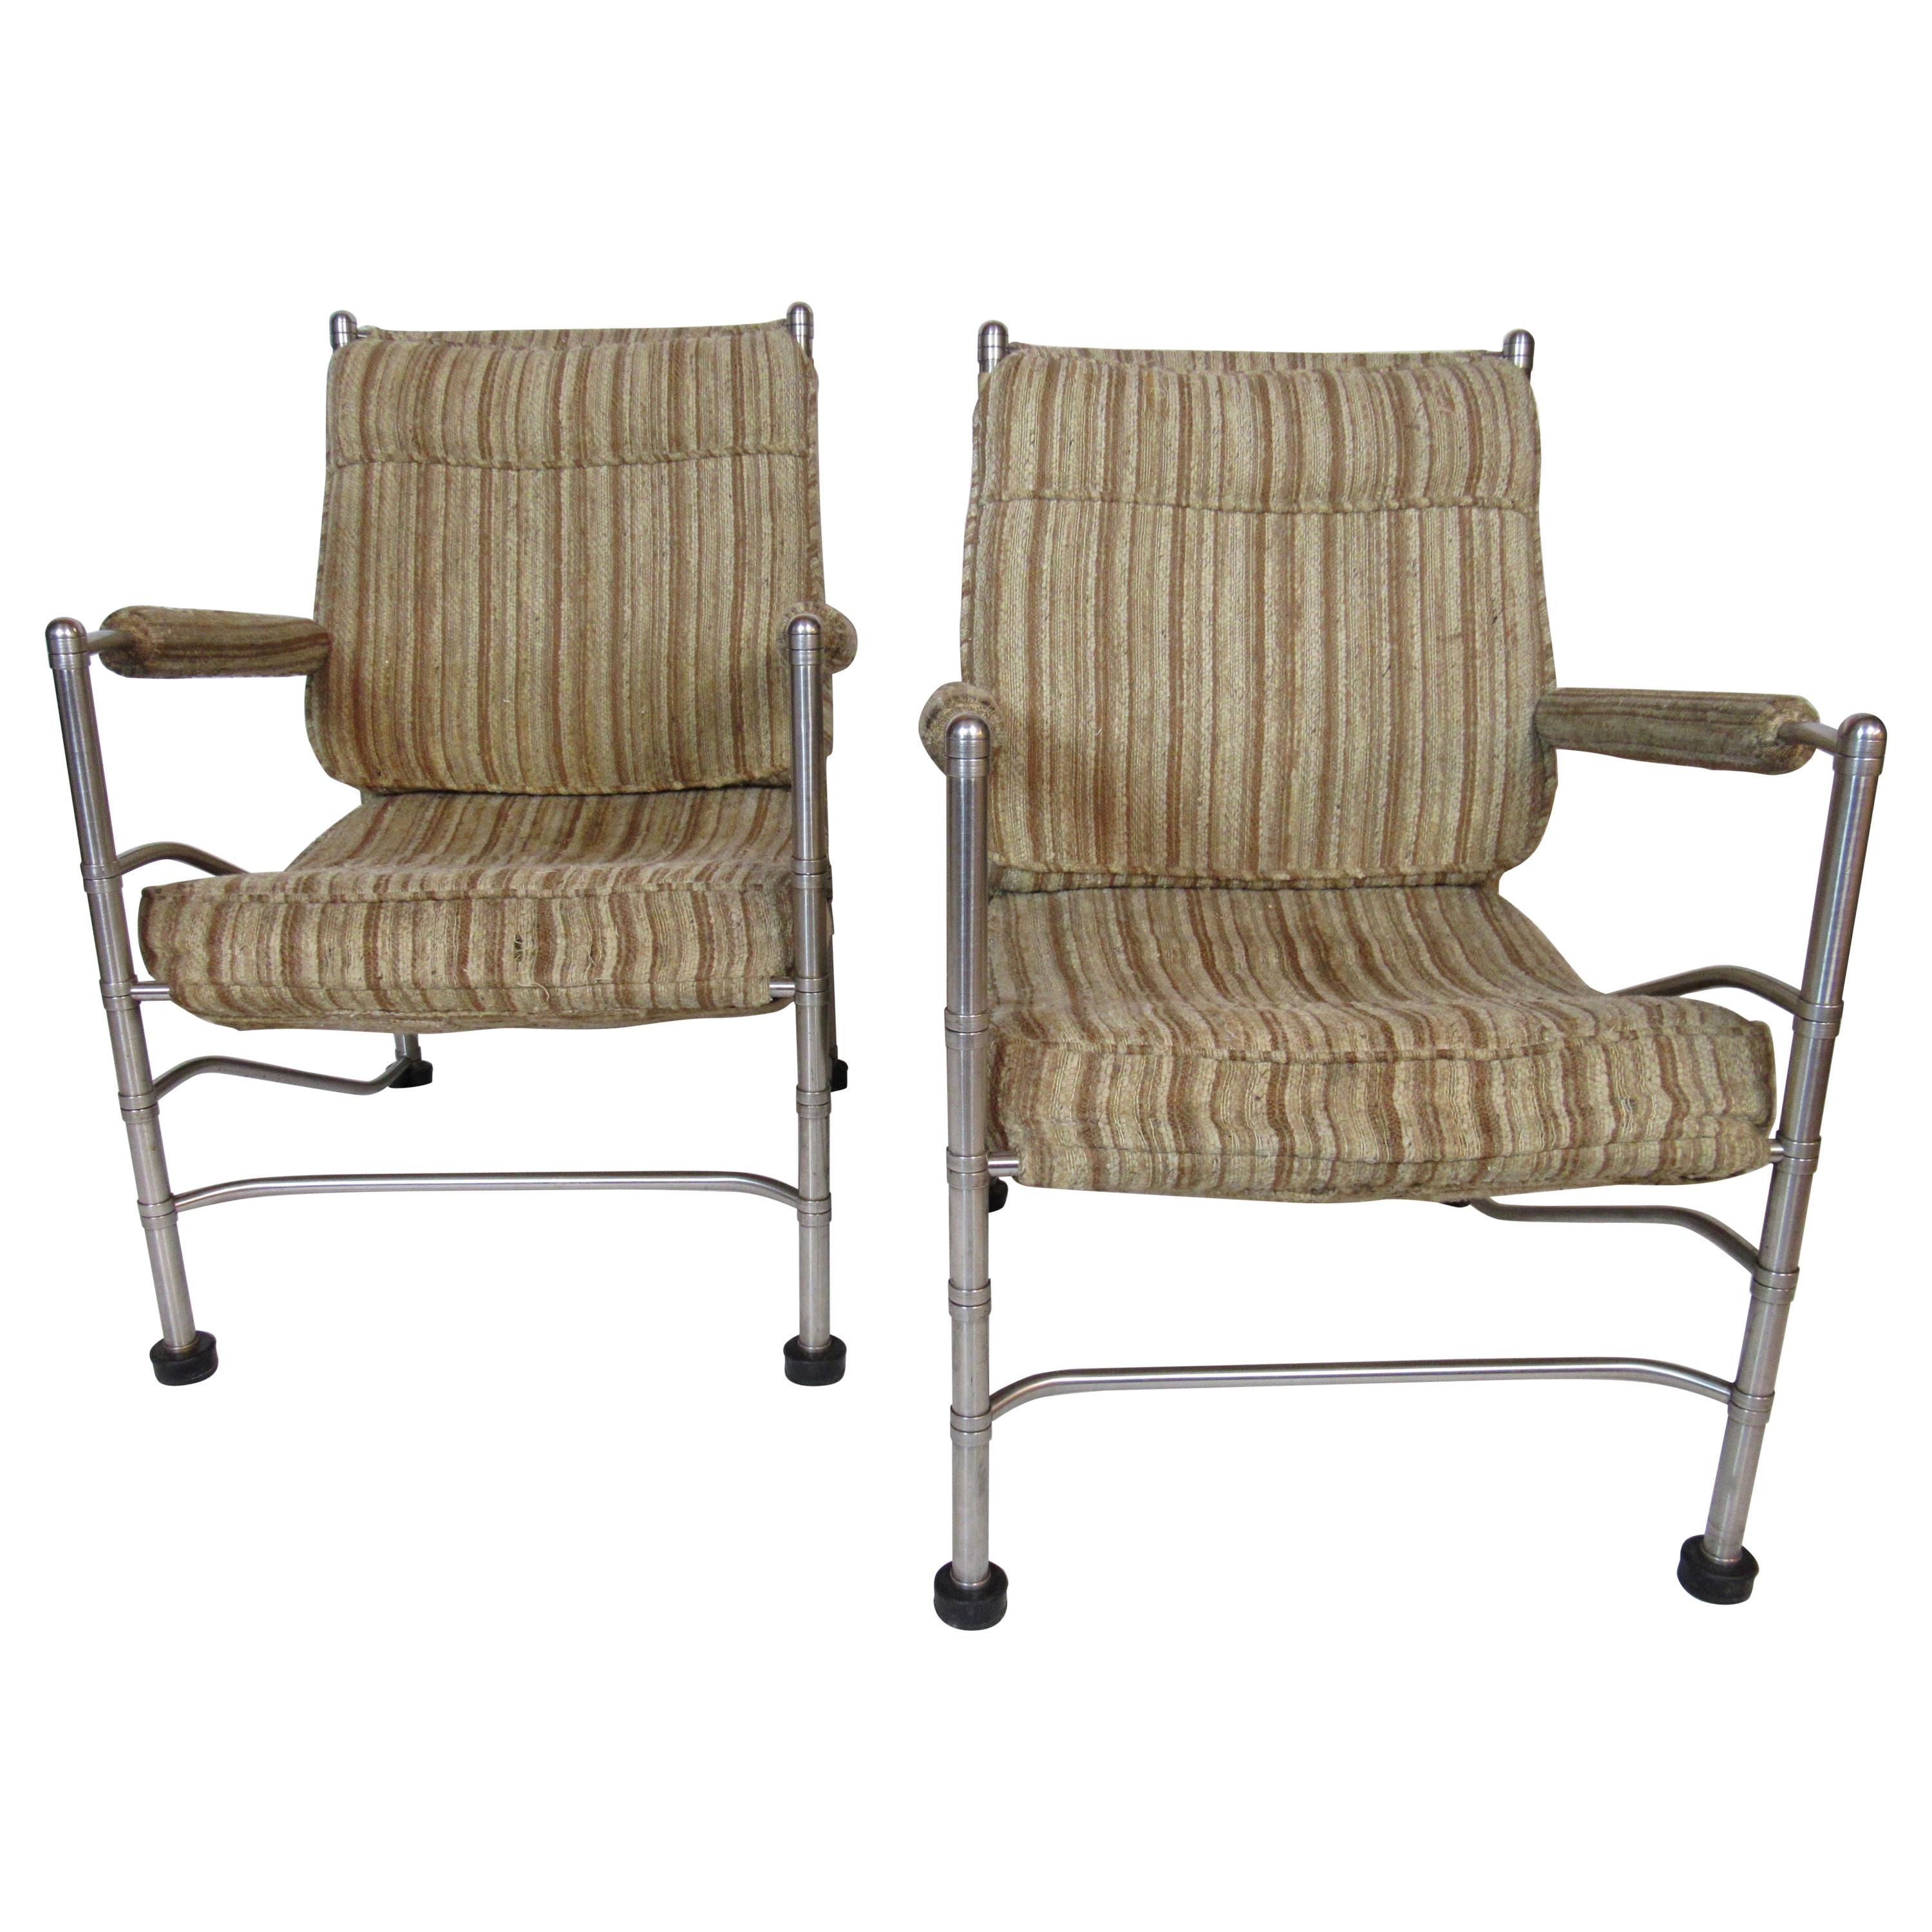 Pair of Lounge Chairs Warren McArthur Style No. 1014 AUR, circa 1935